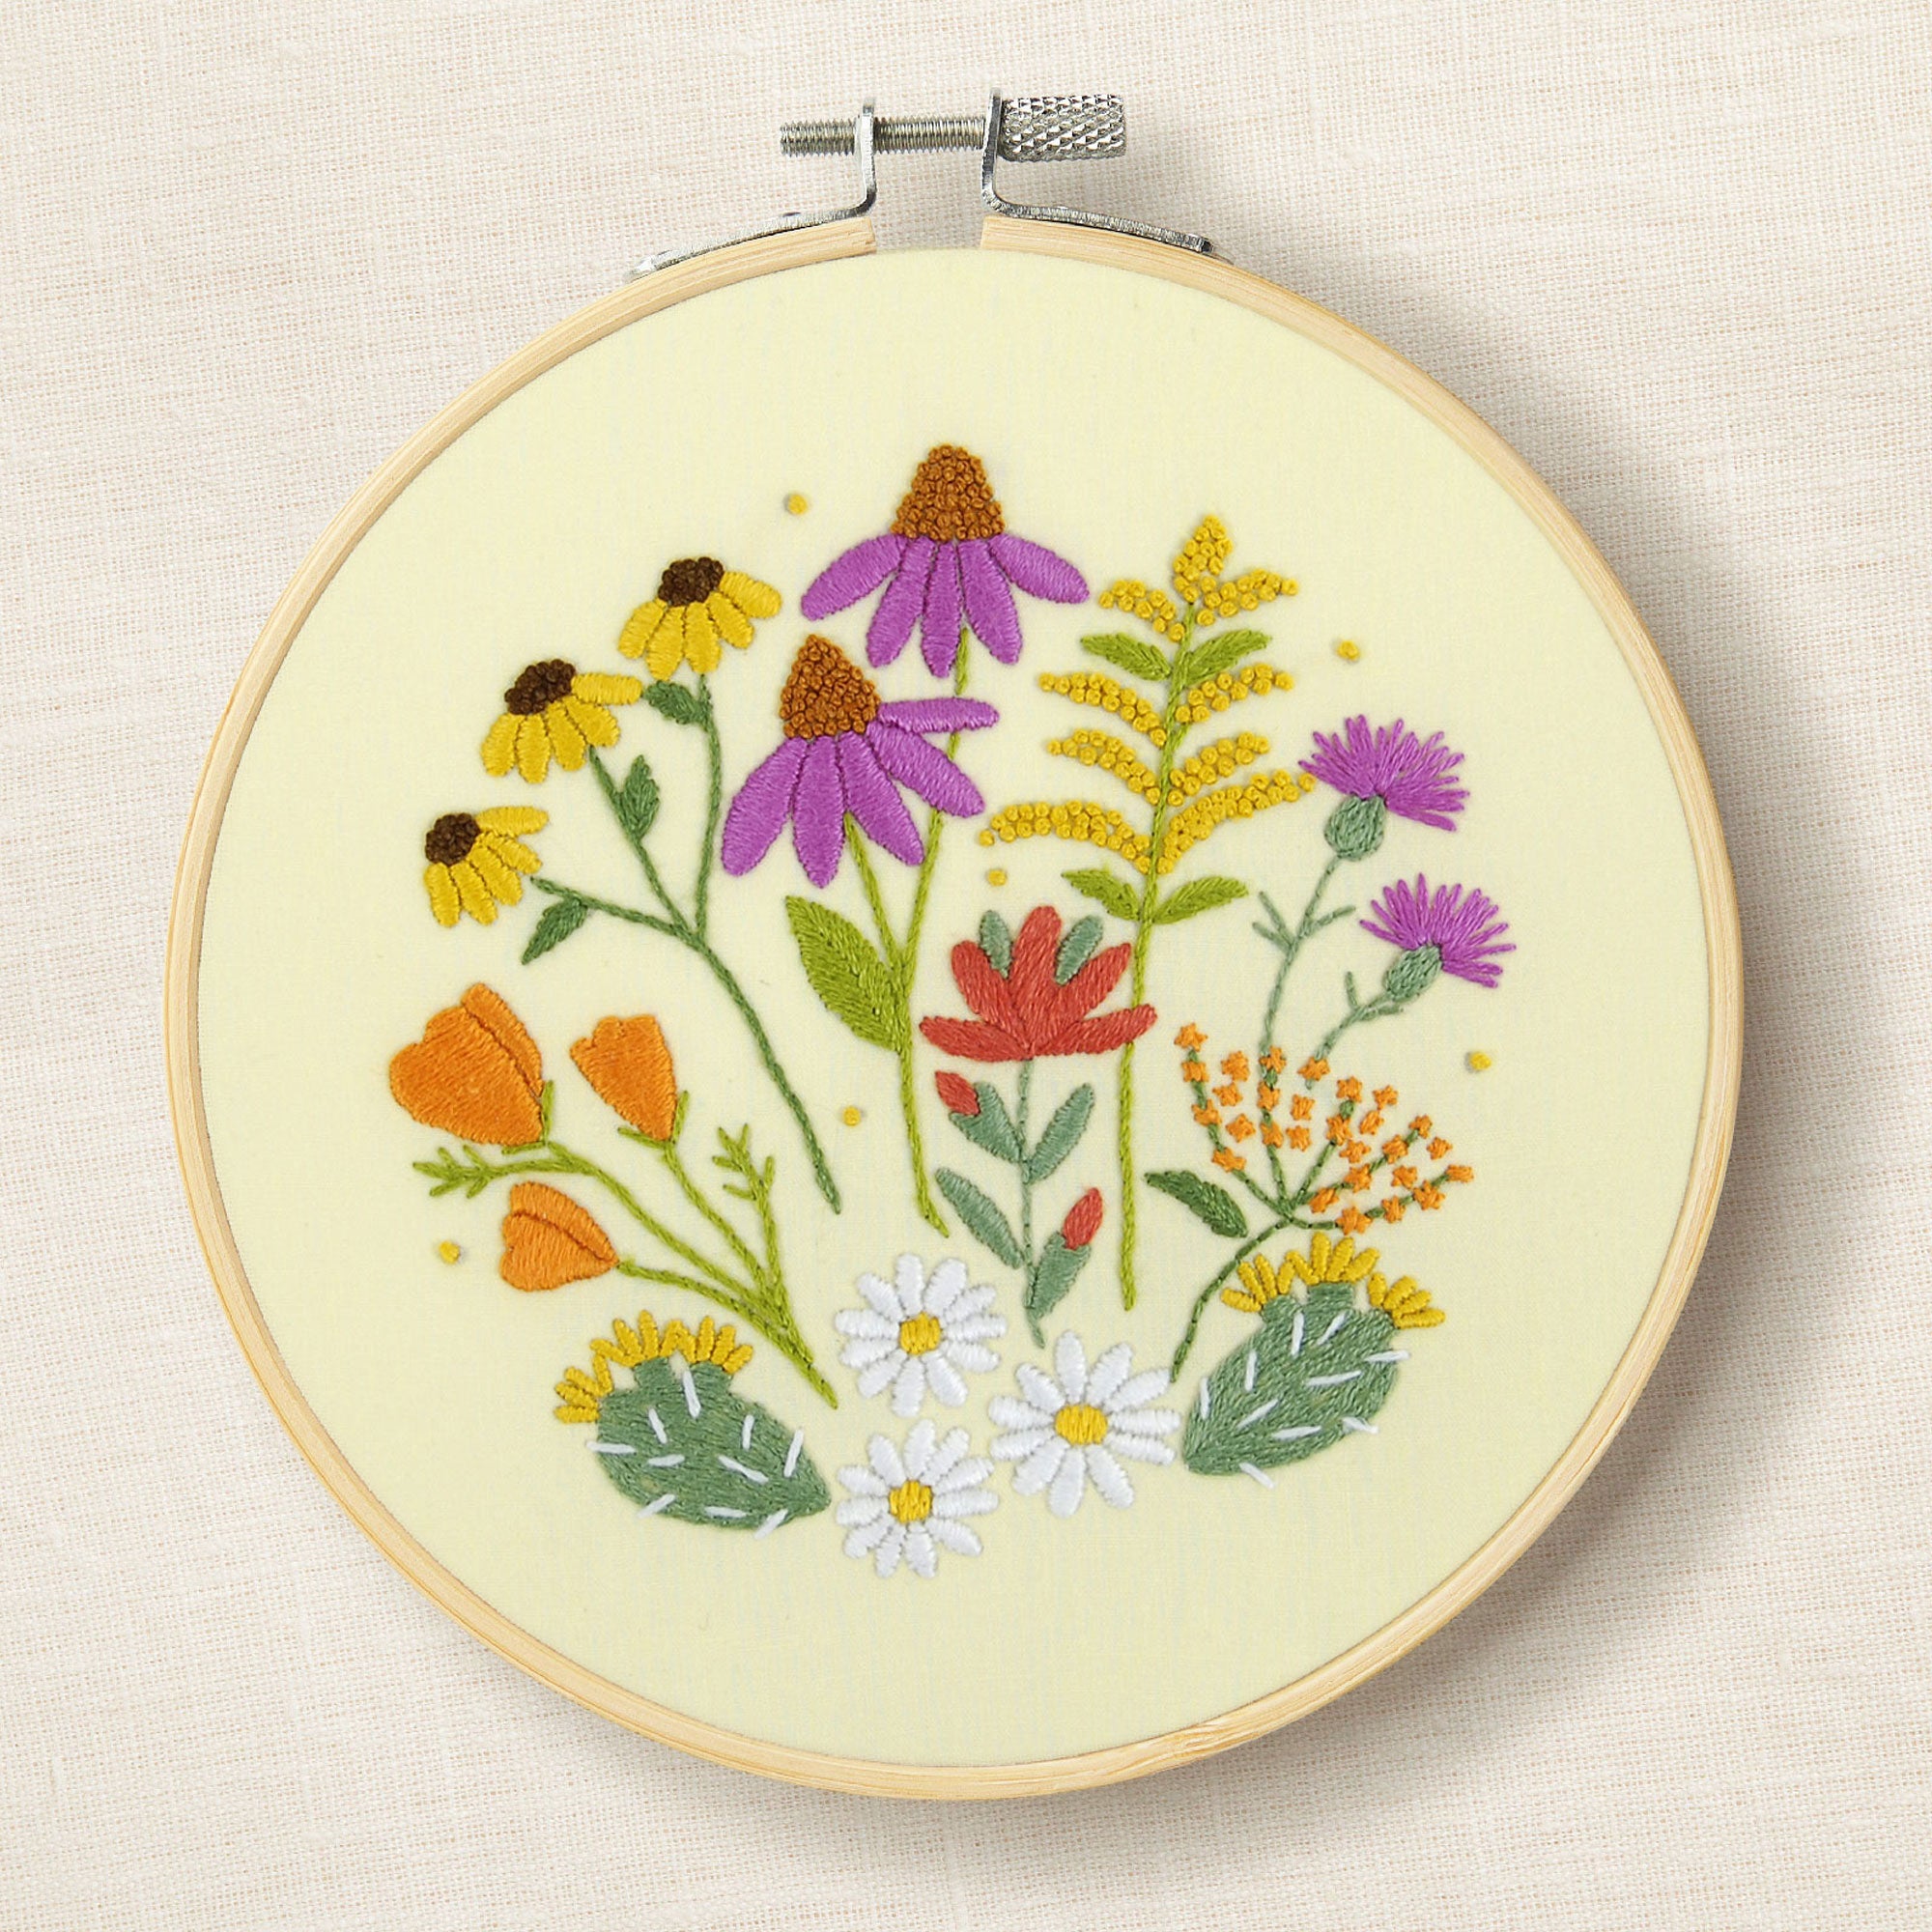 DMC Mediterranean Garden by Celeste Johnston (Embroidery Kit)